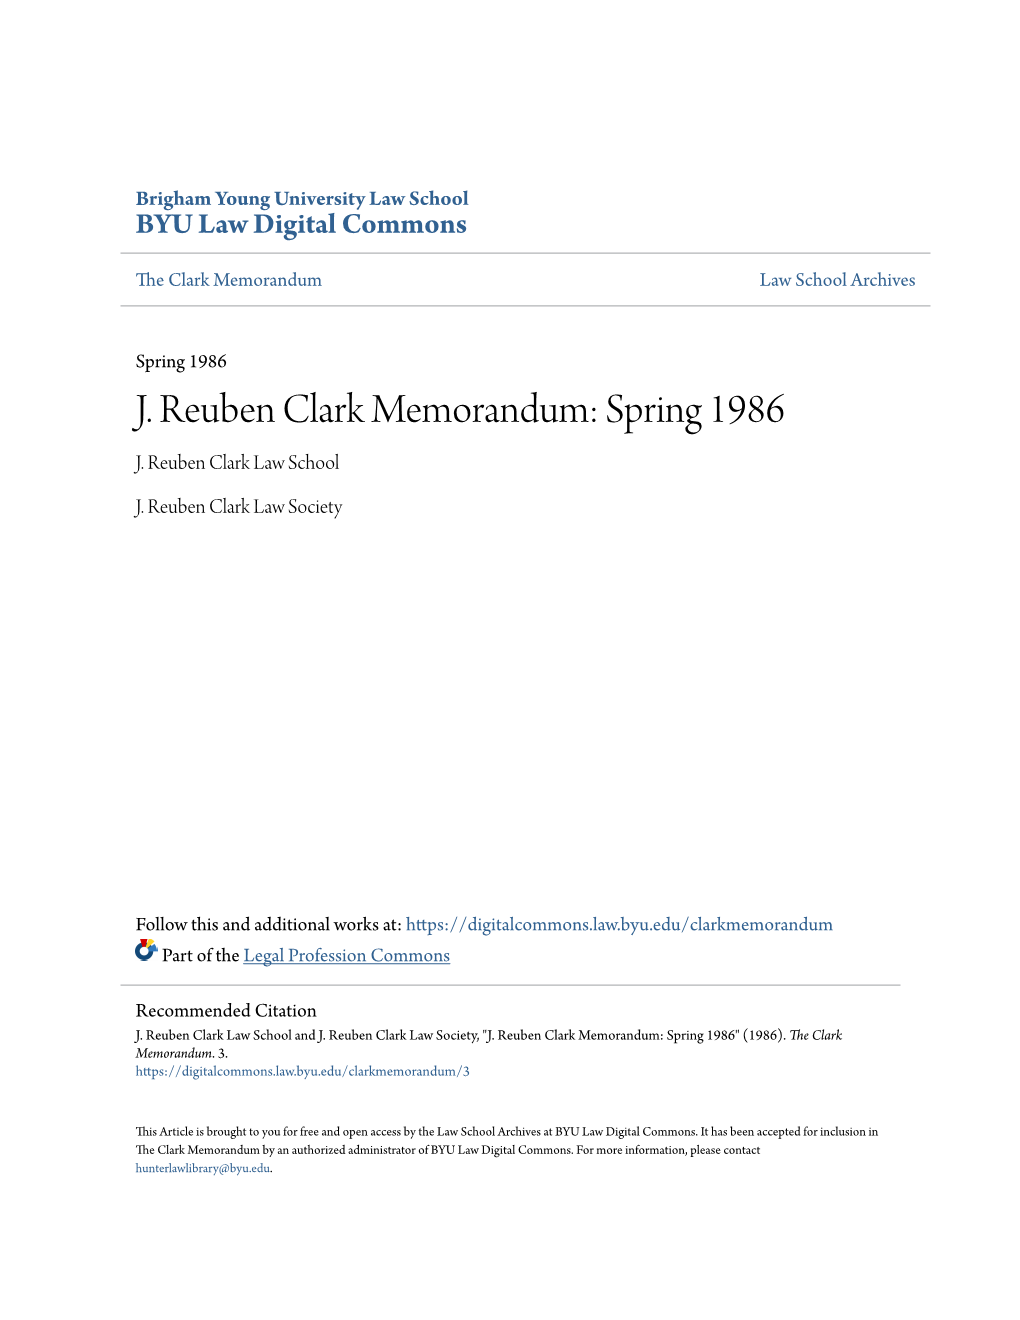 J. Reuben Clark Memorandum: Spring 1986 J